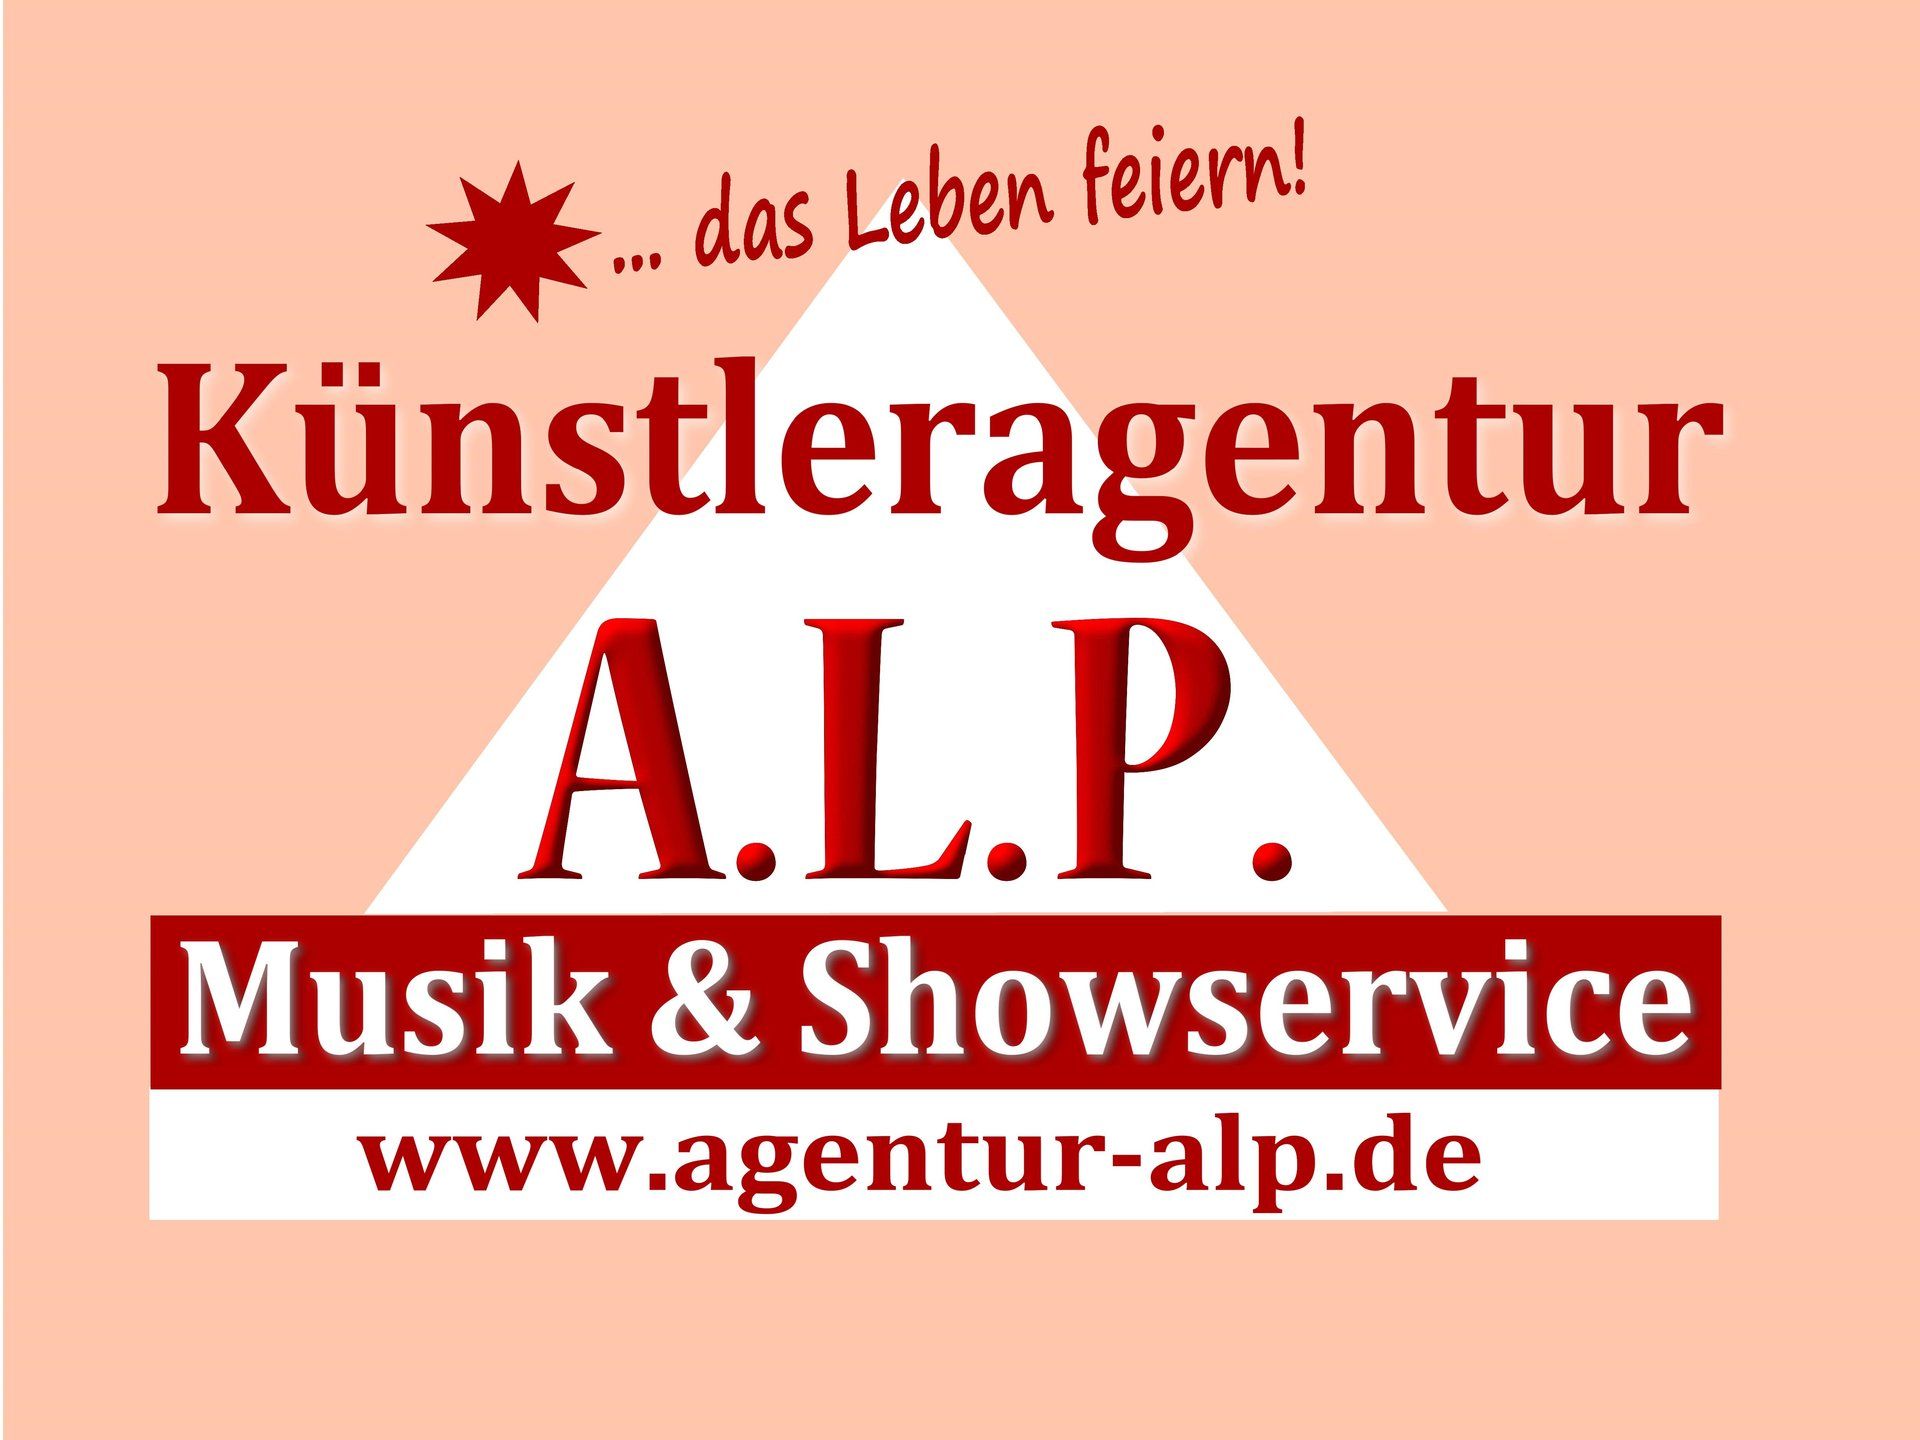 (c) Agentur-alp.de